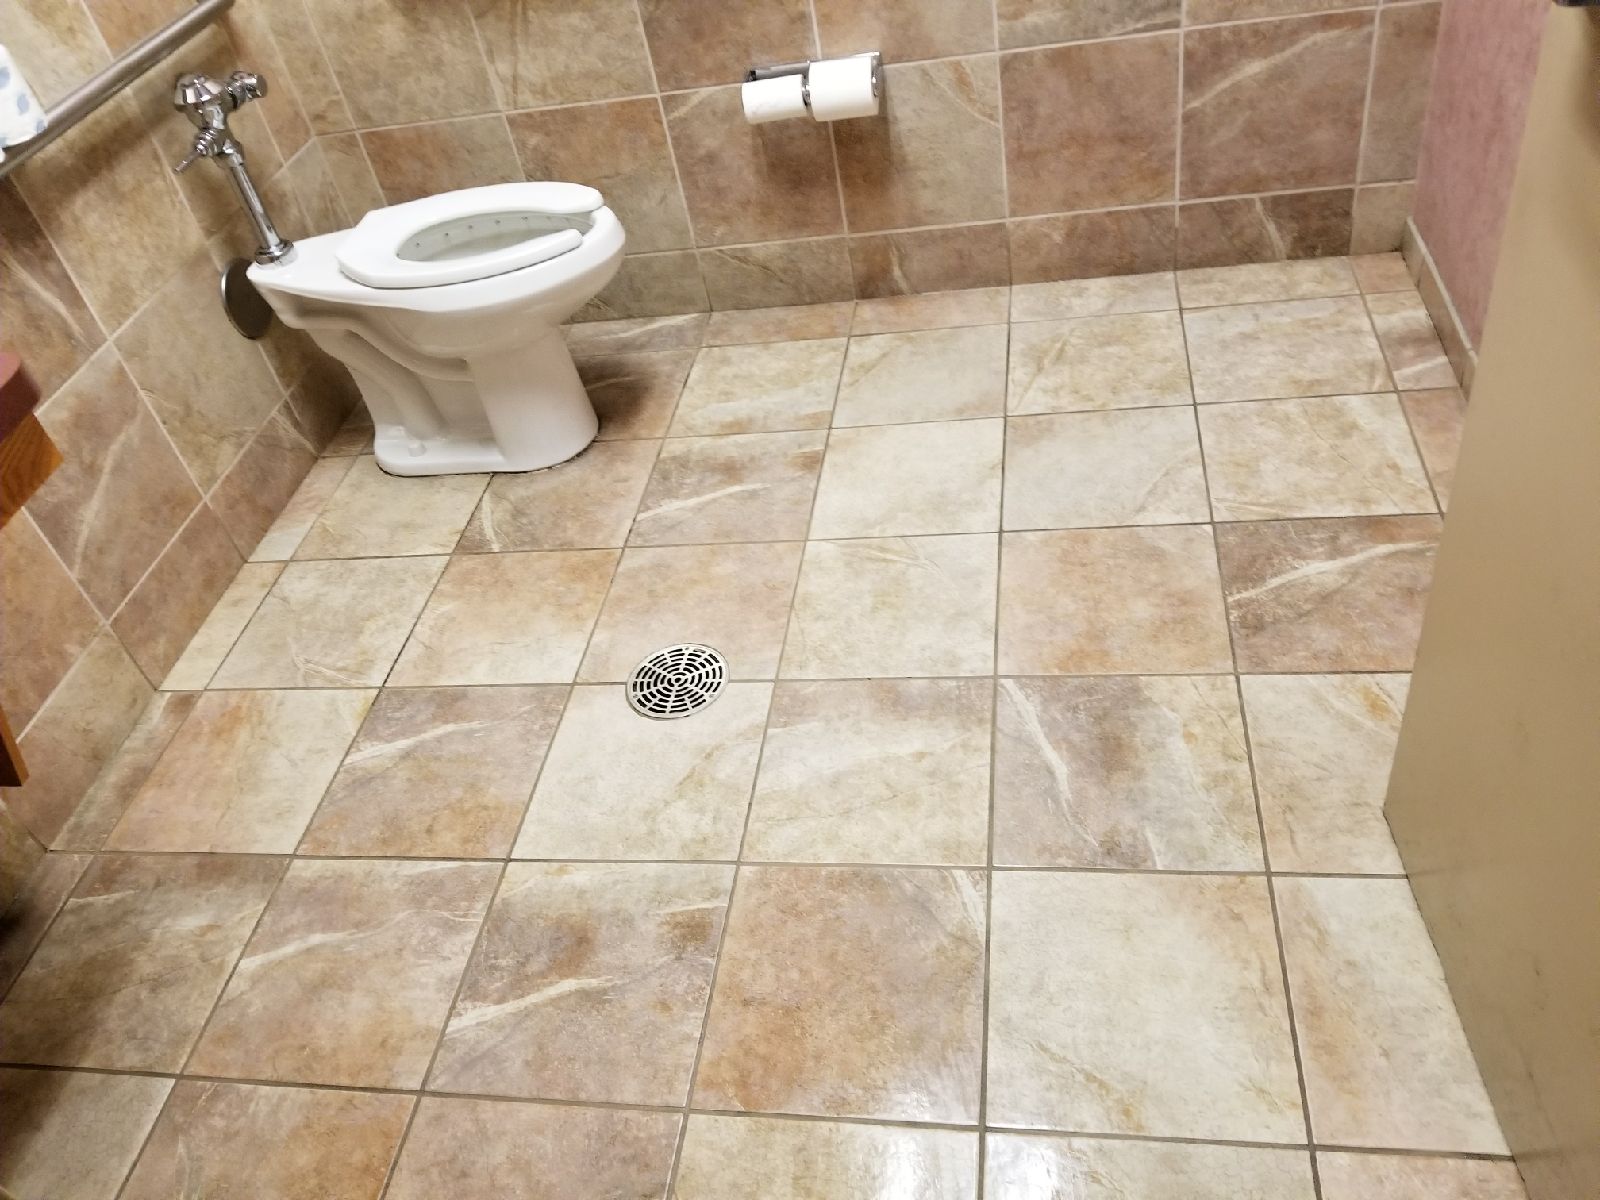 Marbel bathroom floor MN Services Minnetonka, MN